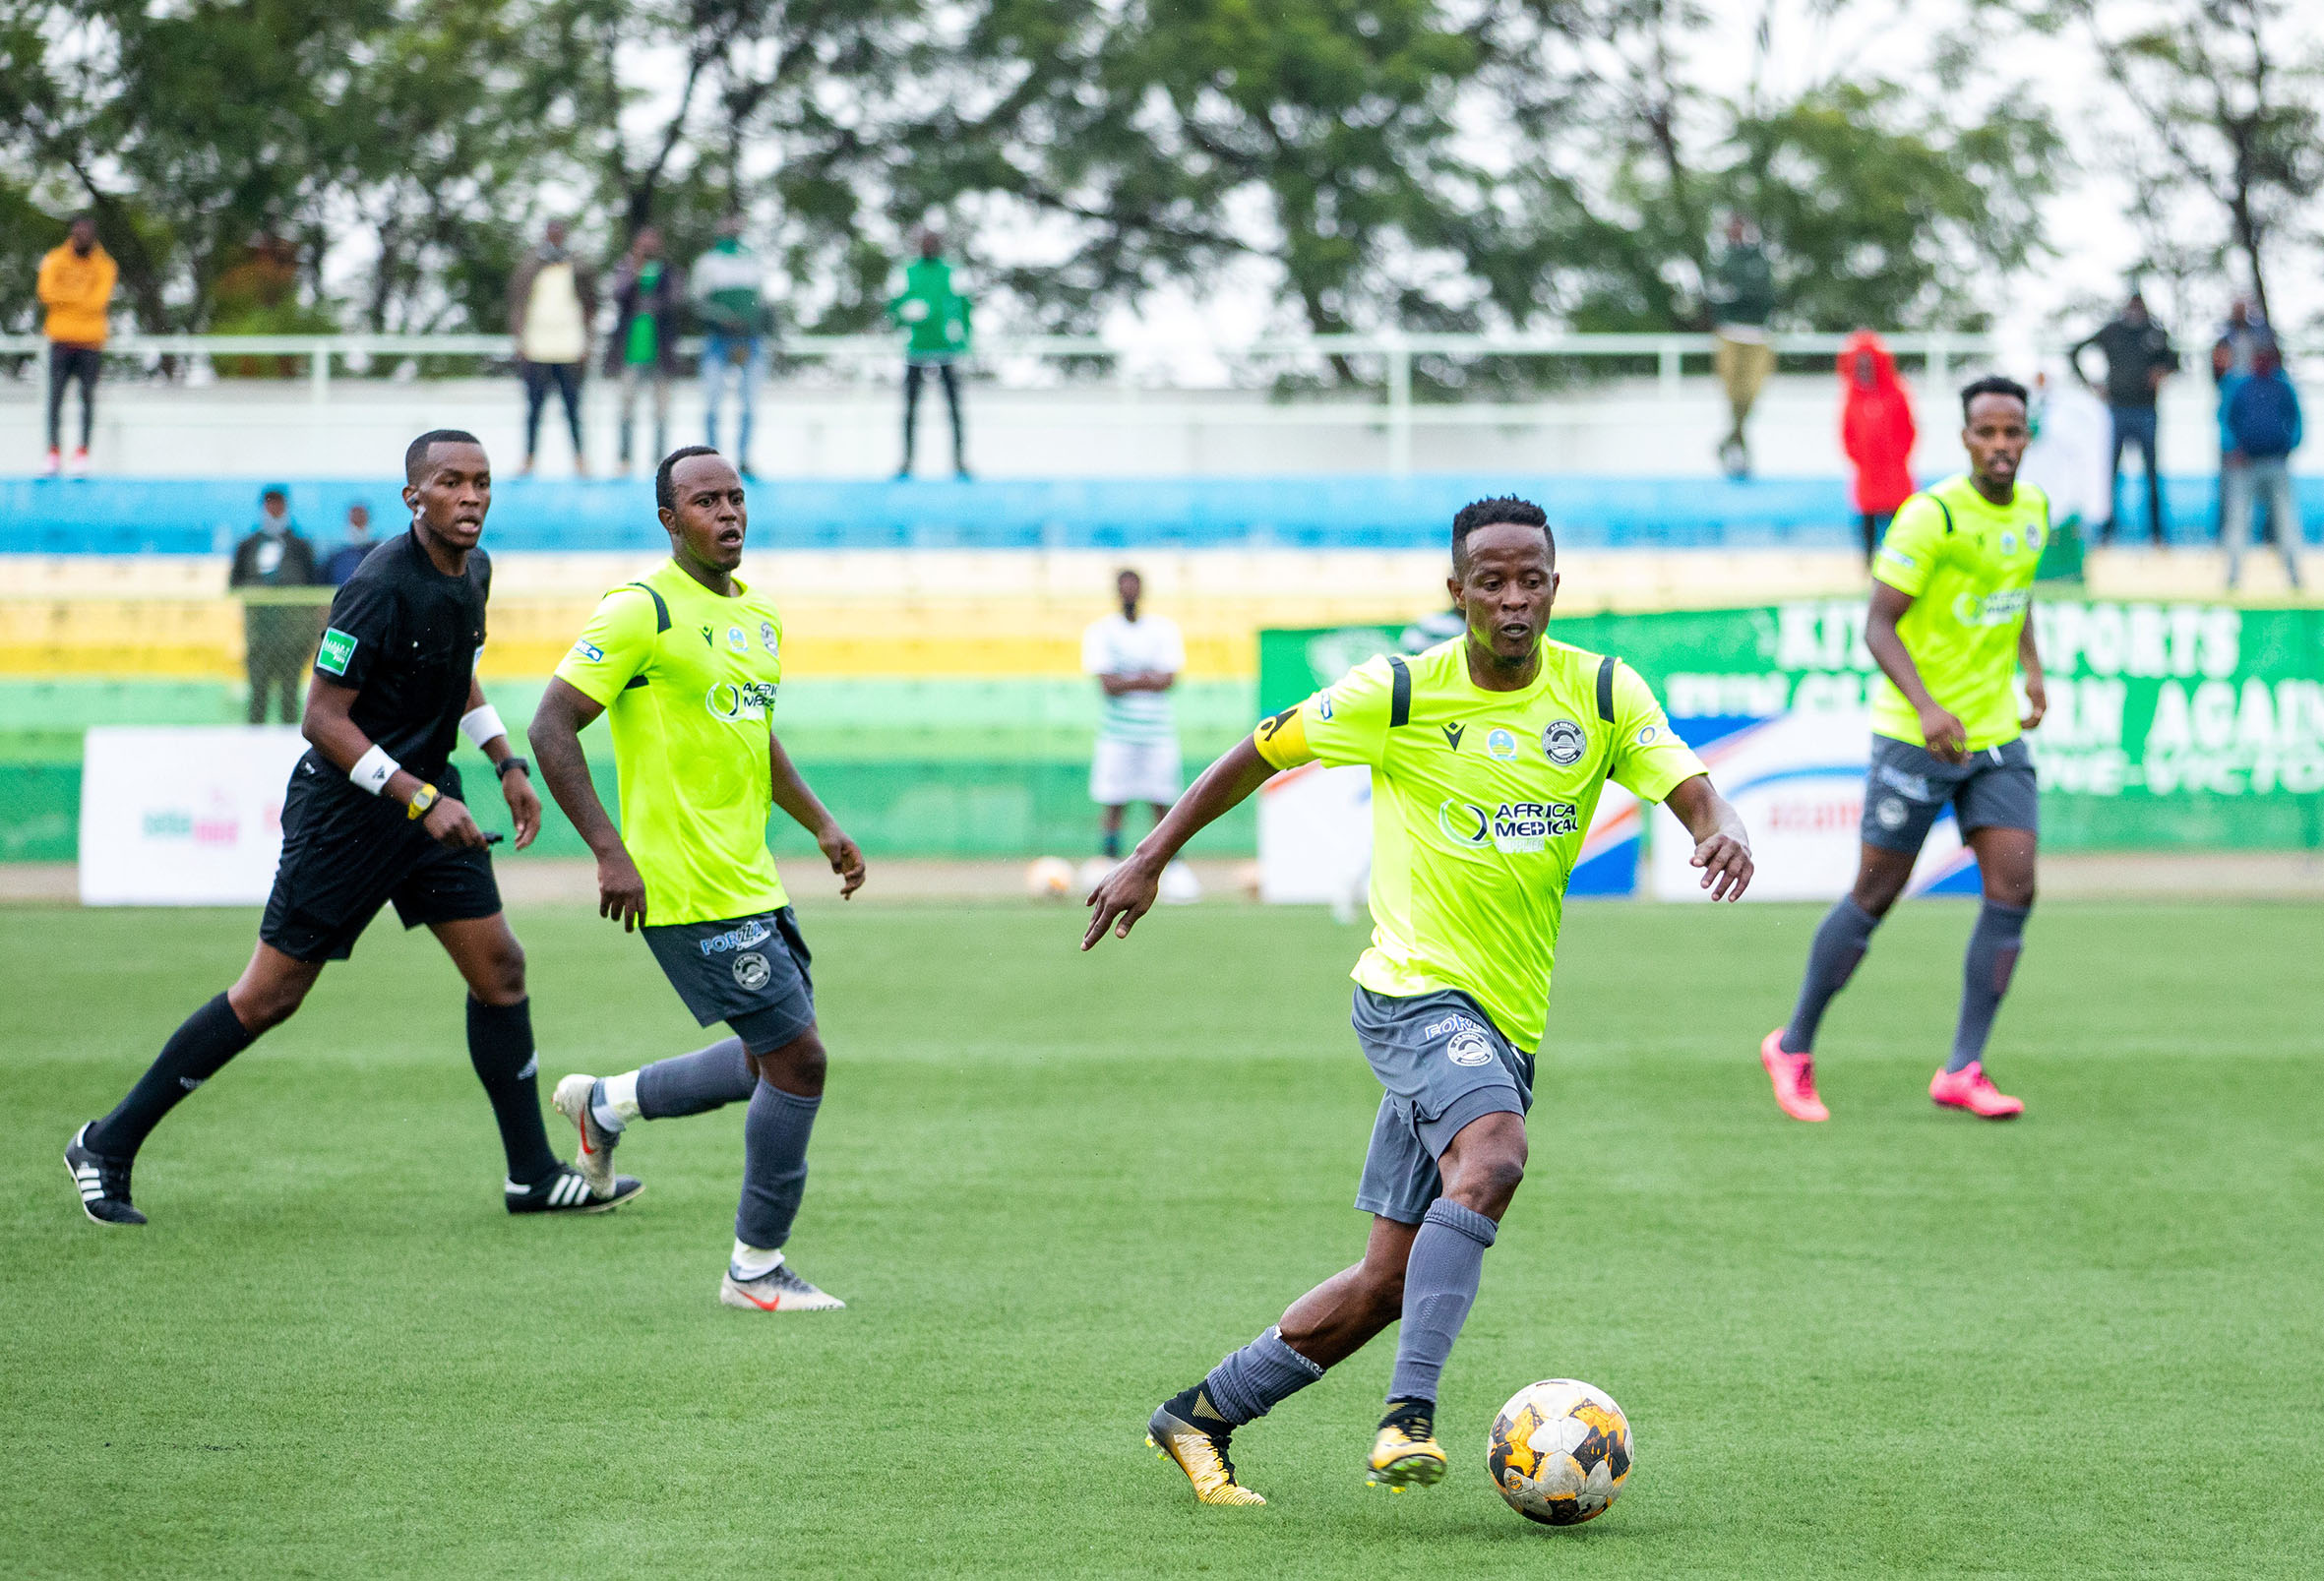 AS Kigali midfielder Haruna Niyonzima with ball during a past league match against Kiyovu at Kigali stadium on February 16. Photo: Olivier Mugwiza.